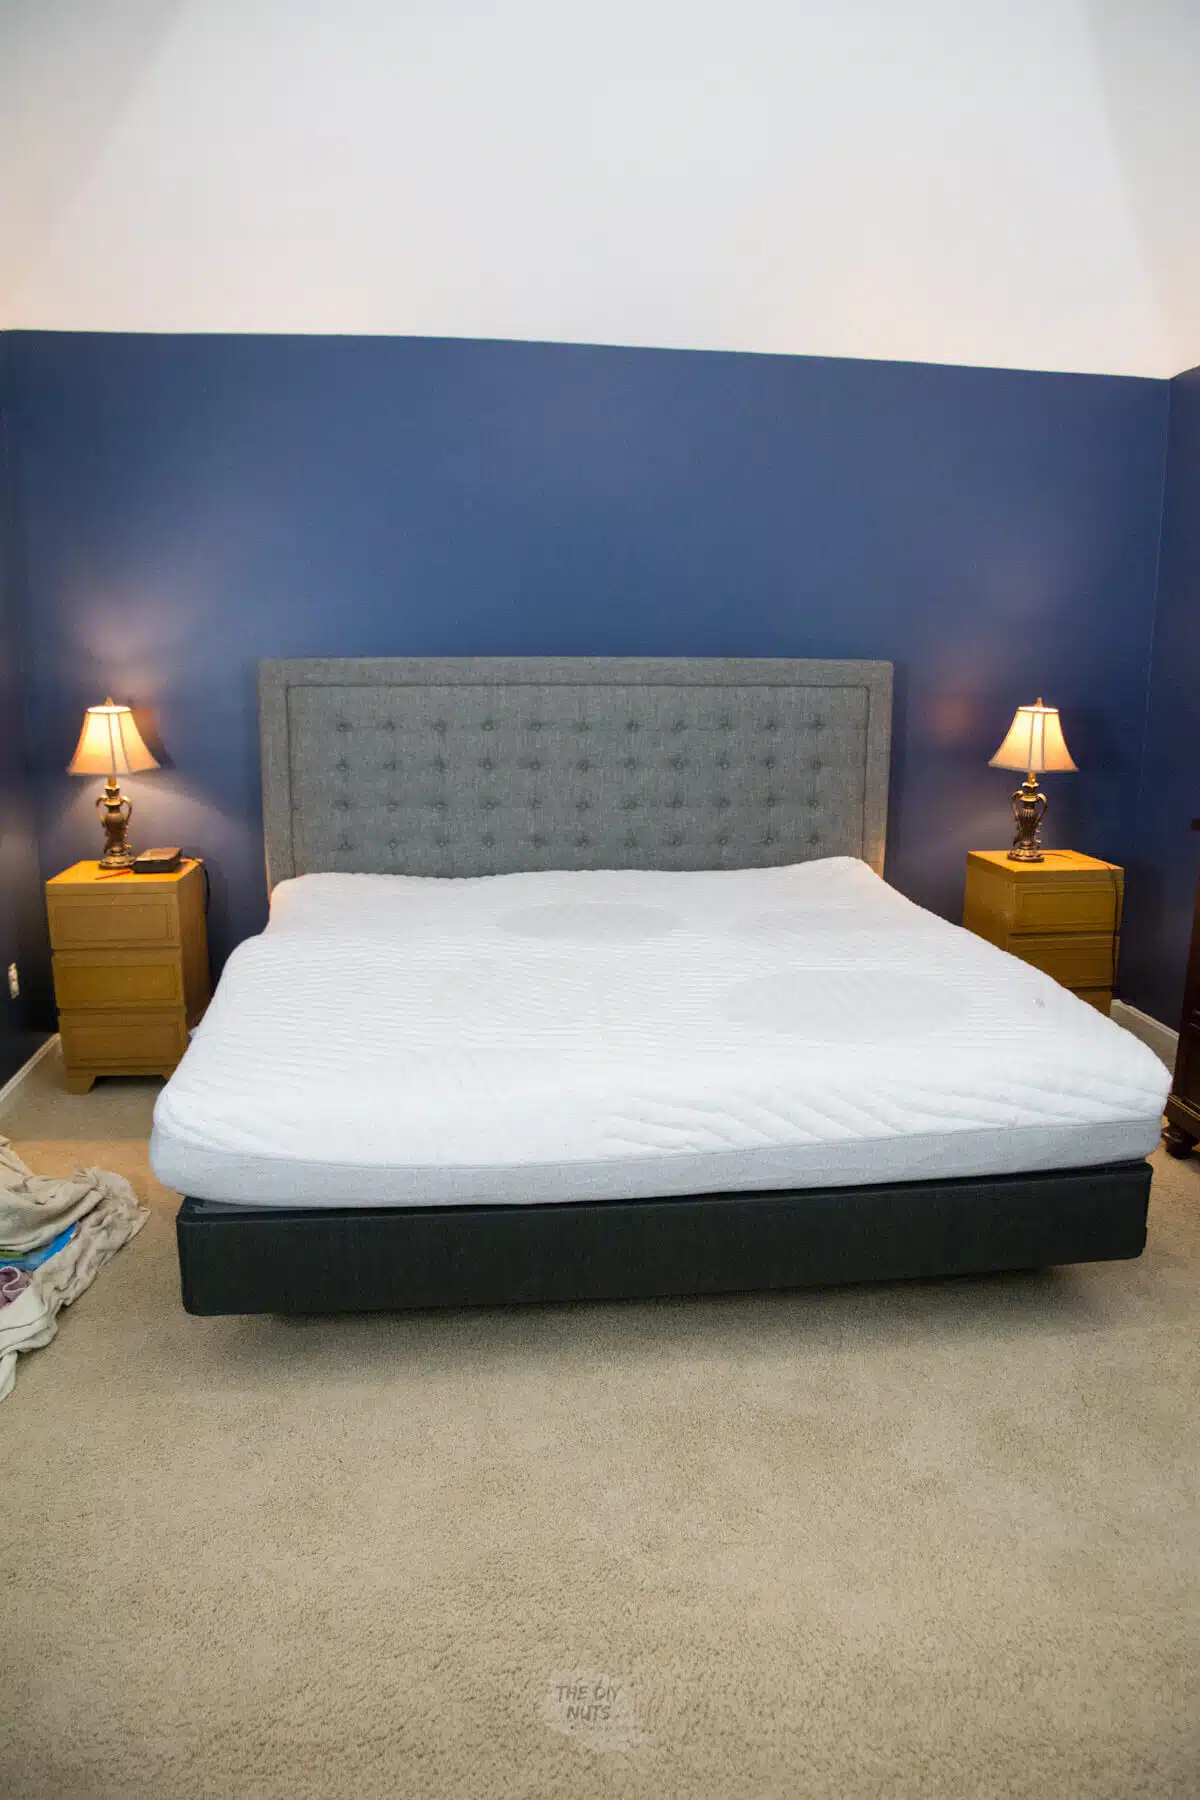 Casper Wave hybrid mattress on foundation with gray headboard in navy blue bedroom